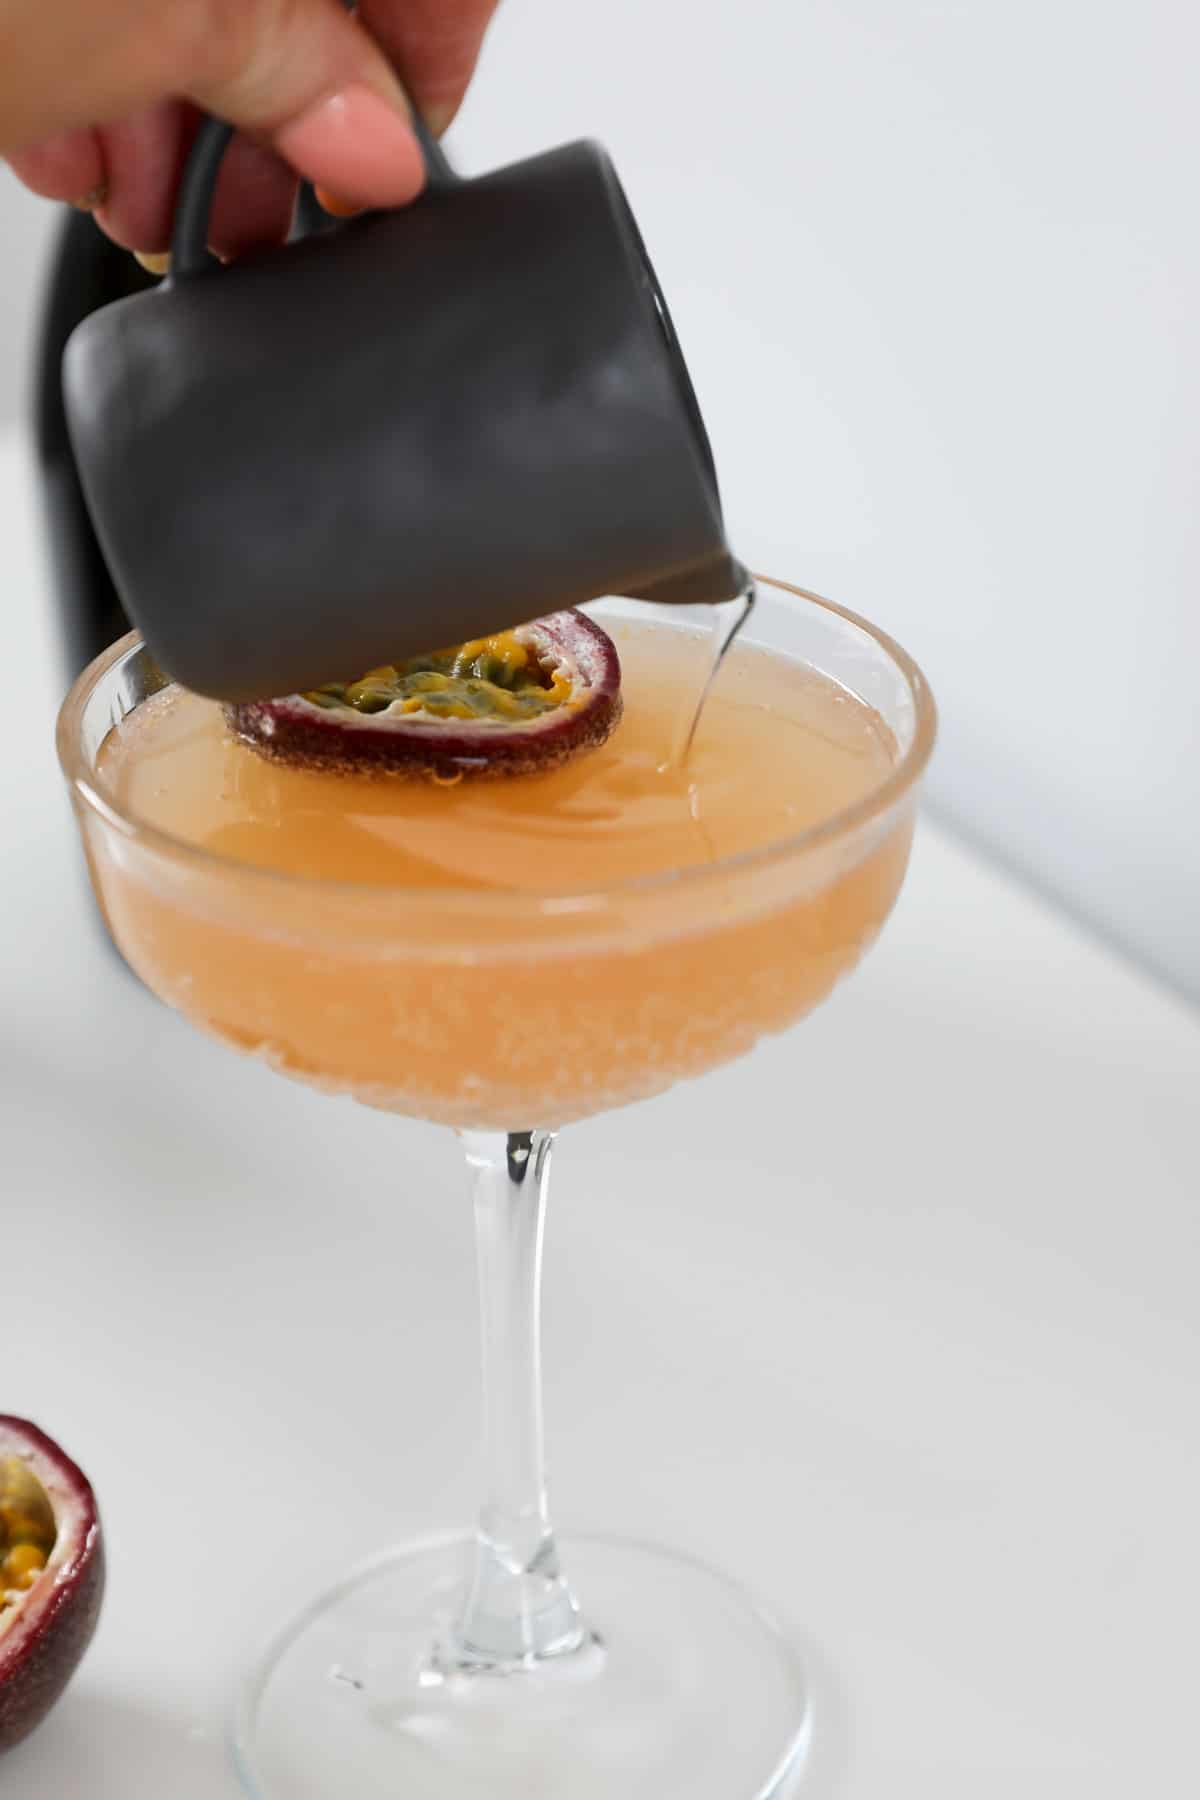 Prosecco being poured into a pornstar martini.